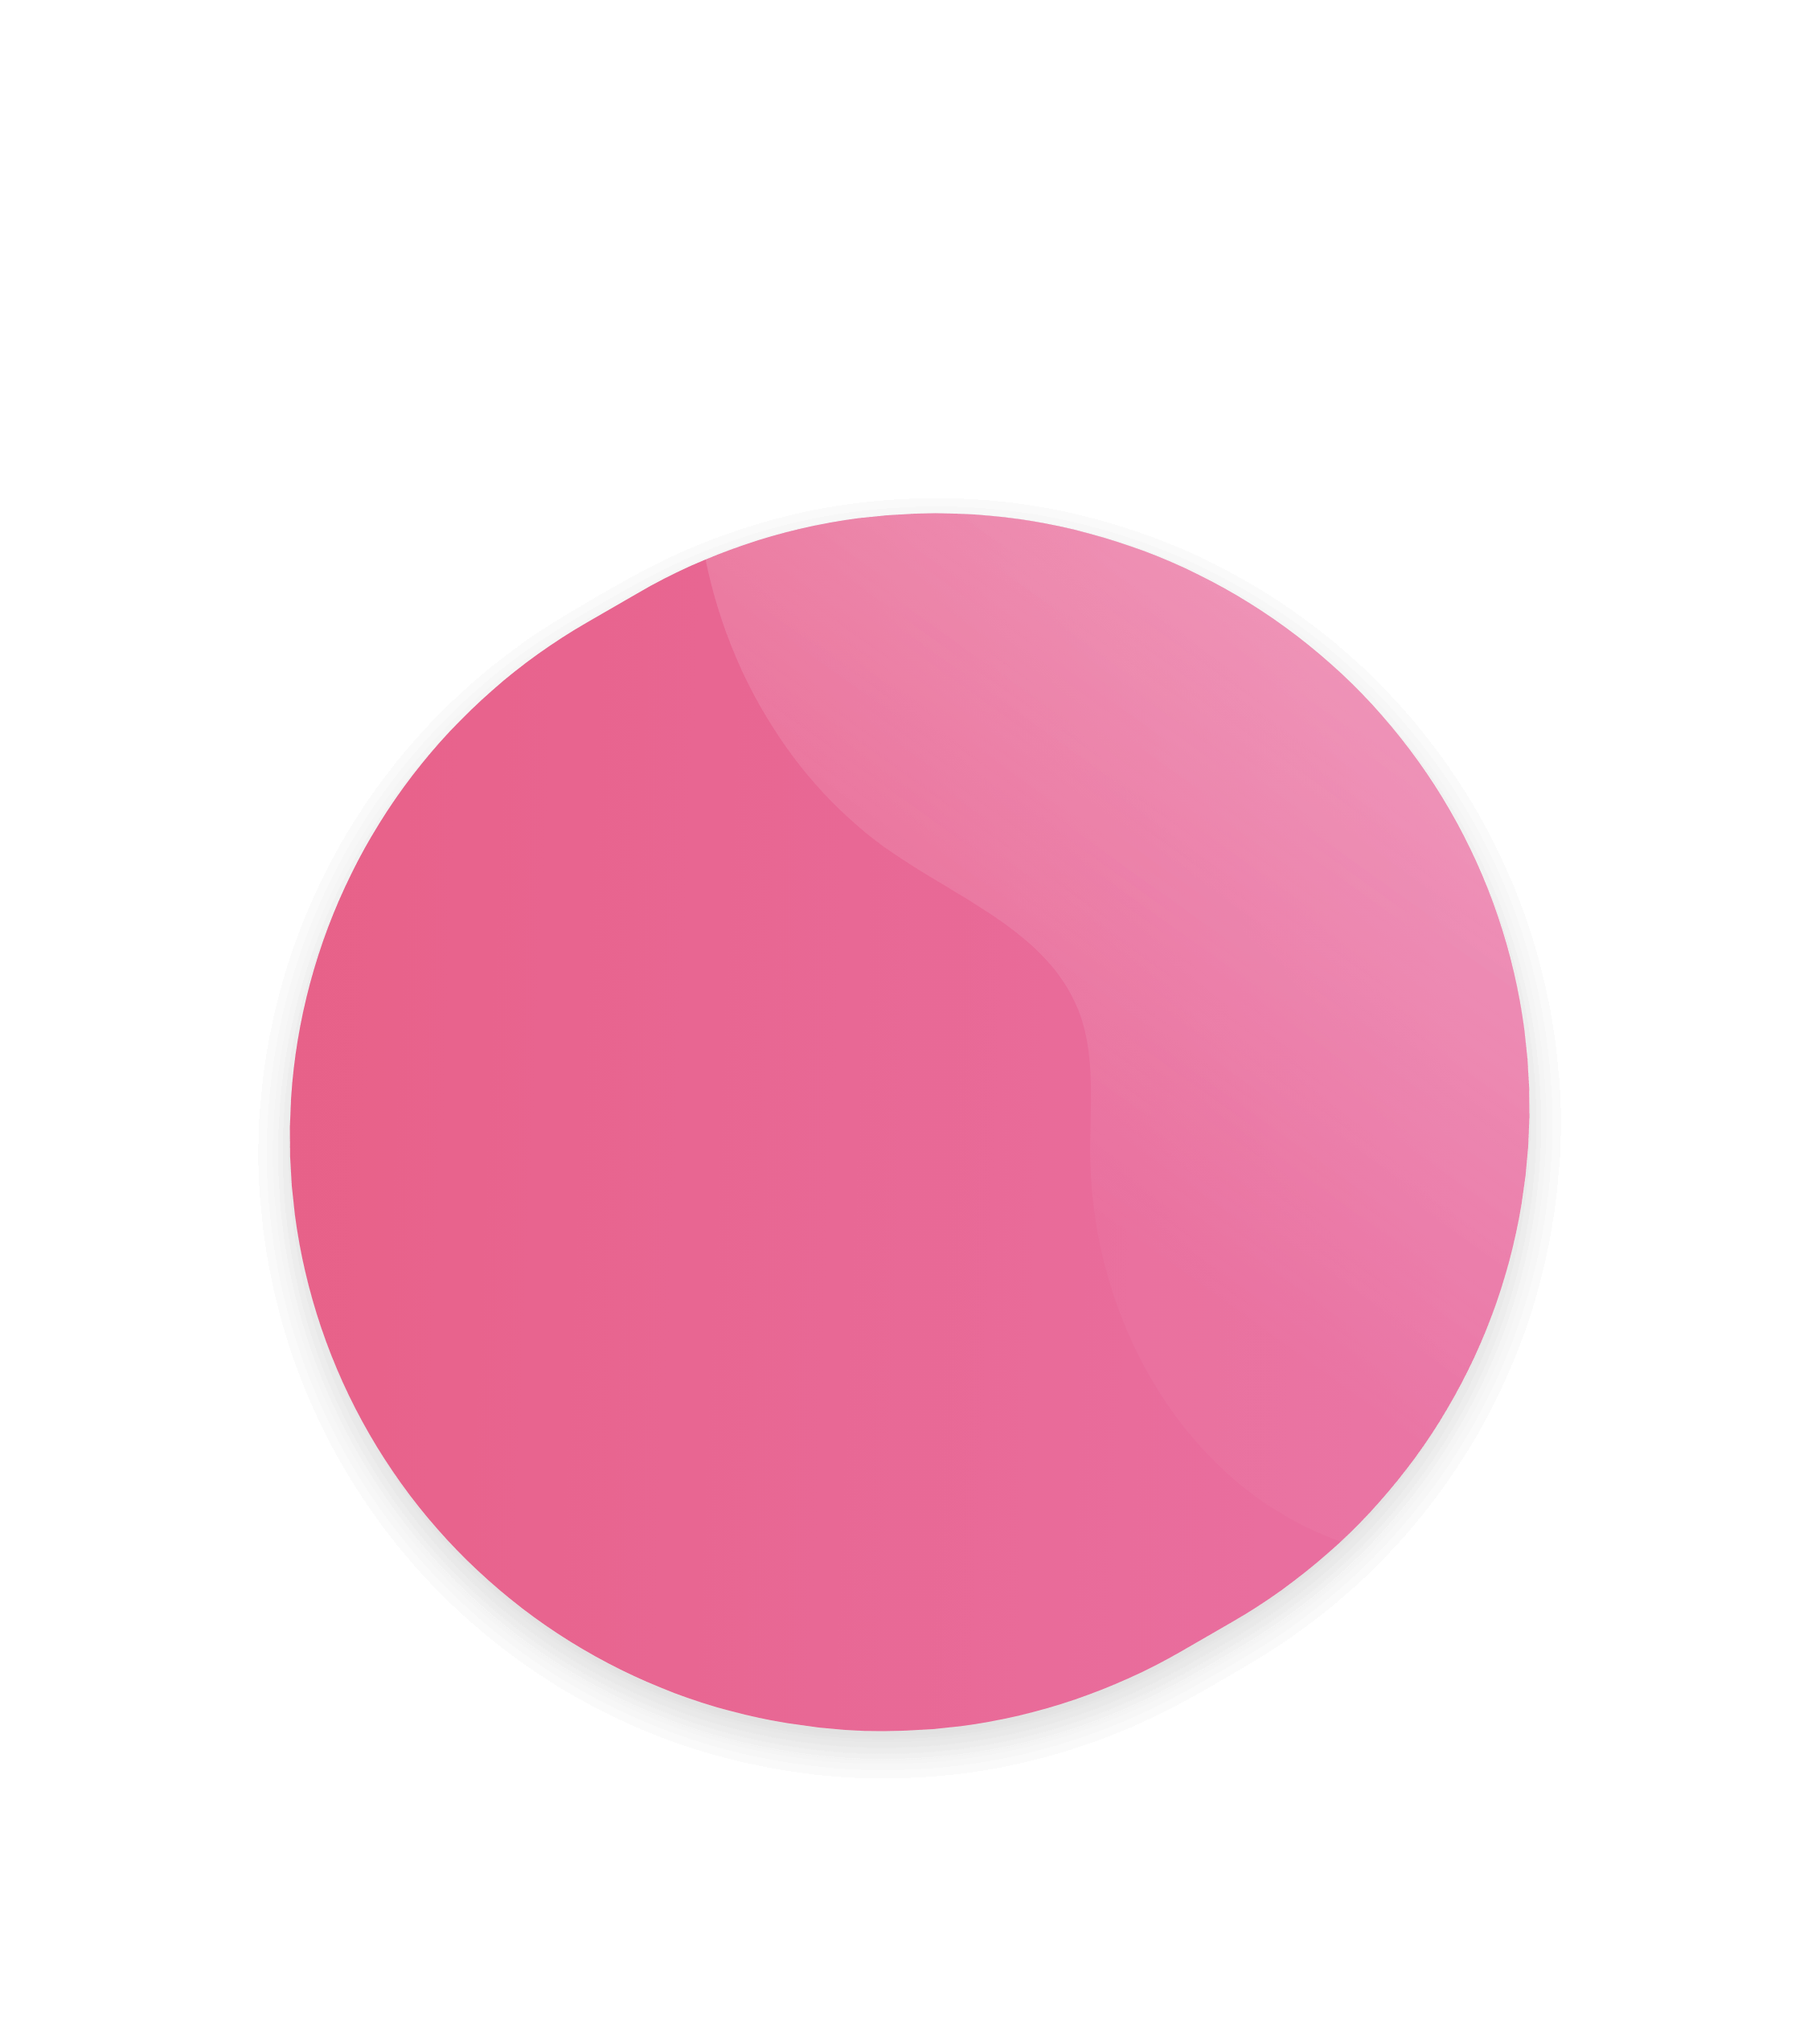 fond rond rose footer logo Planete Gateau